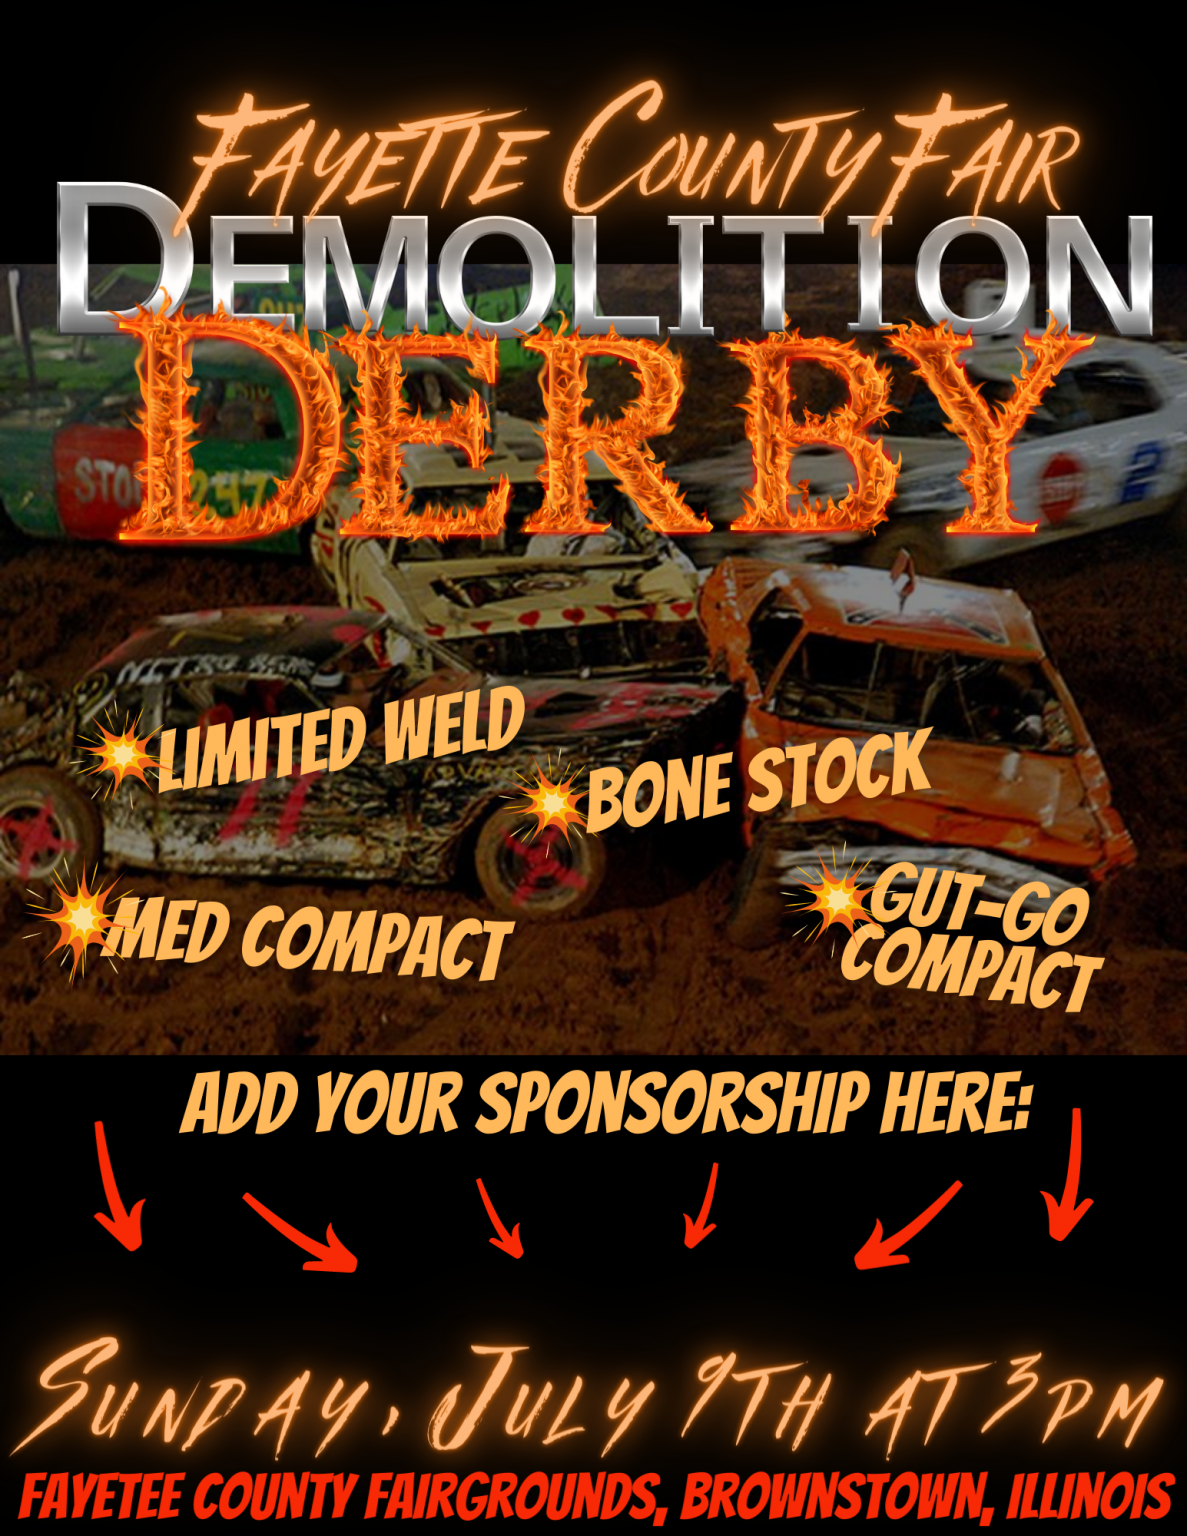 Demolition Derby Fayette County Fair